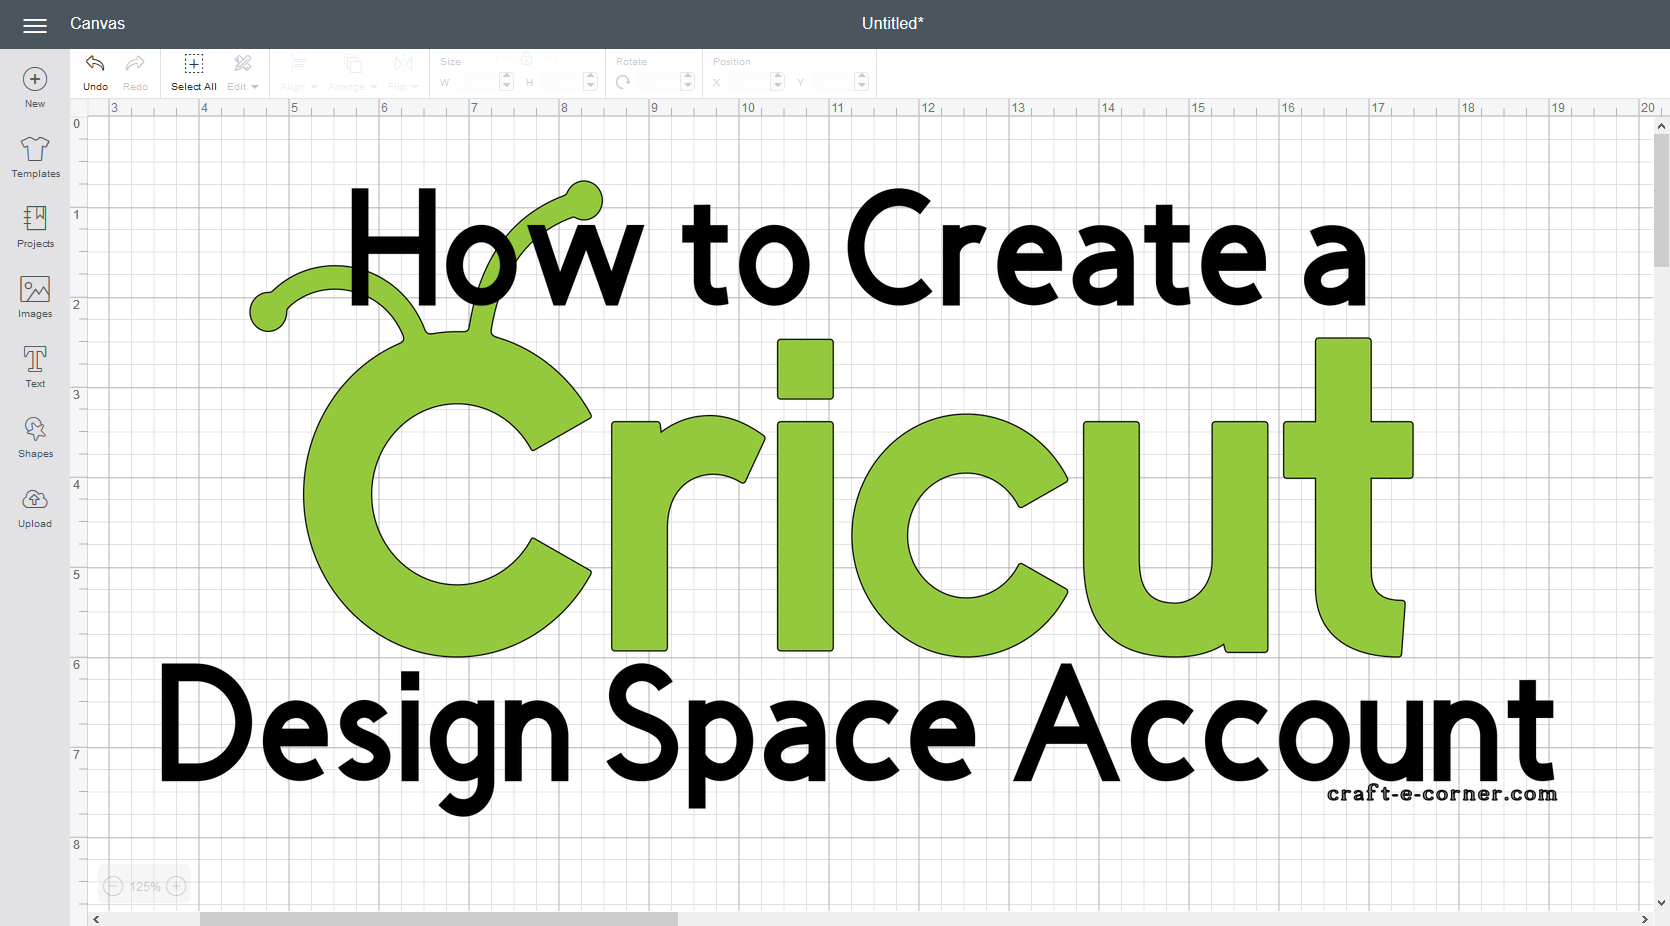 How to Create a Cricut Design Space Account